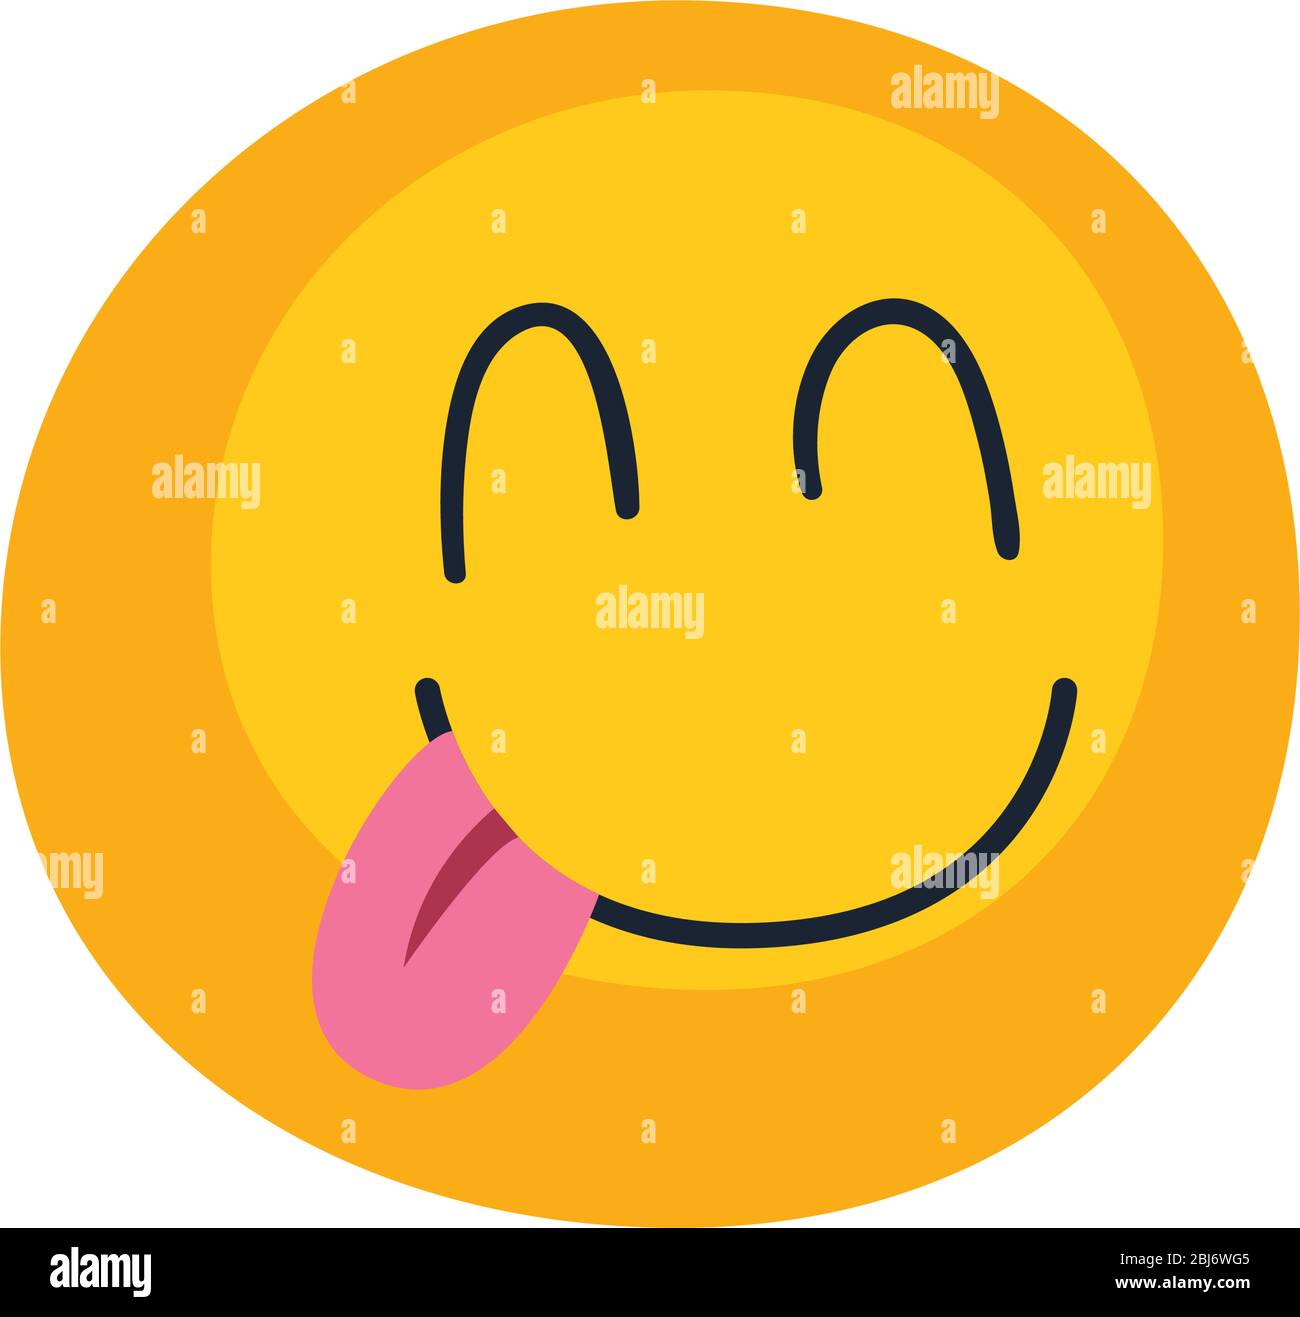 yum emoji face flat style icon design, Cartoon expression emoticon